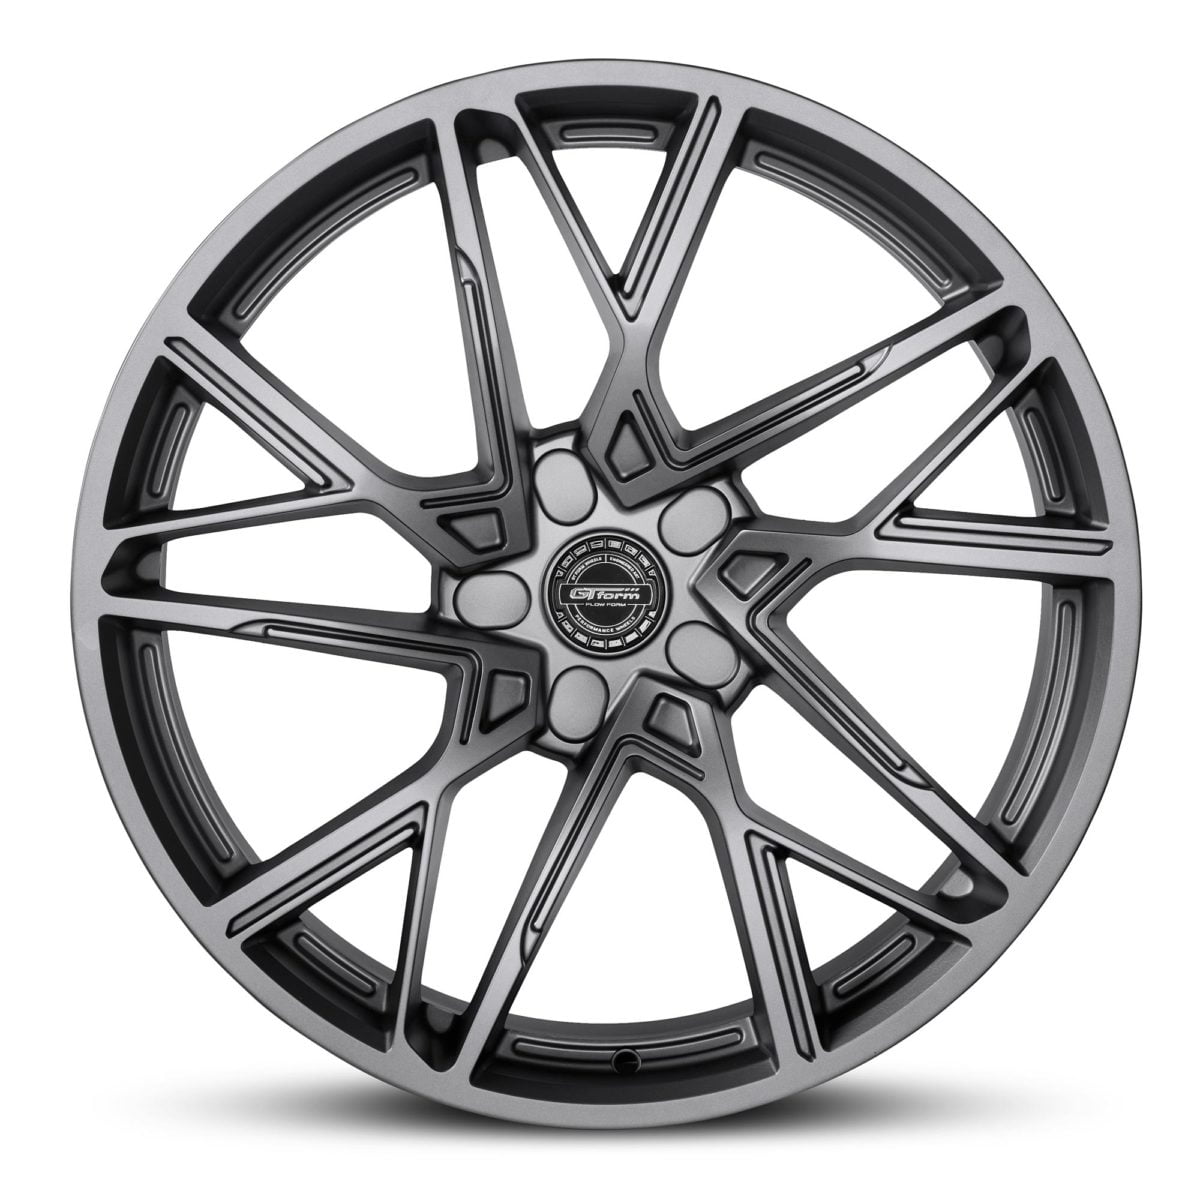 GT Form Interflow satin gunmetal grey wheels performance rims